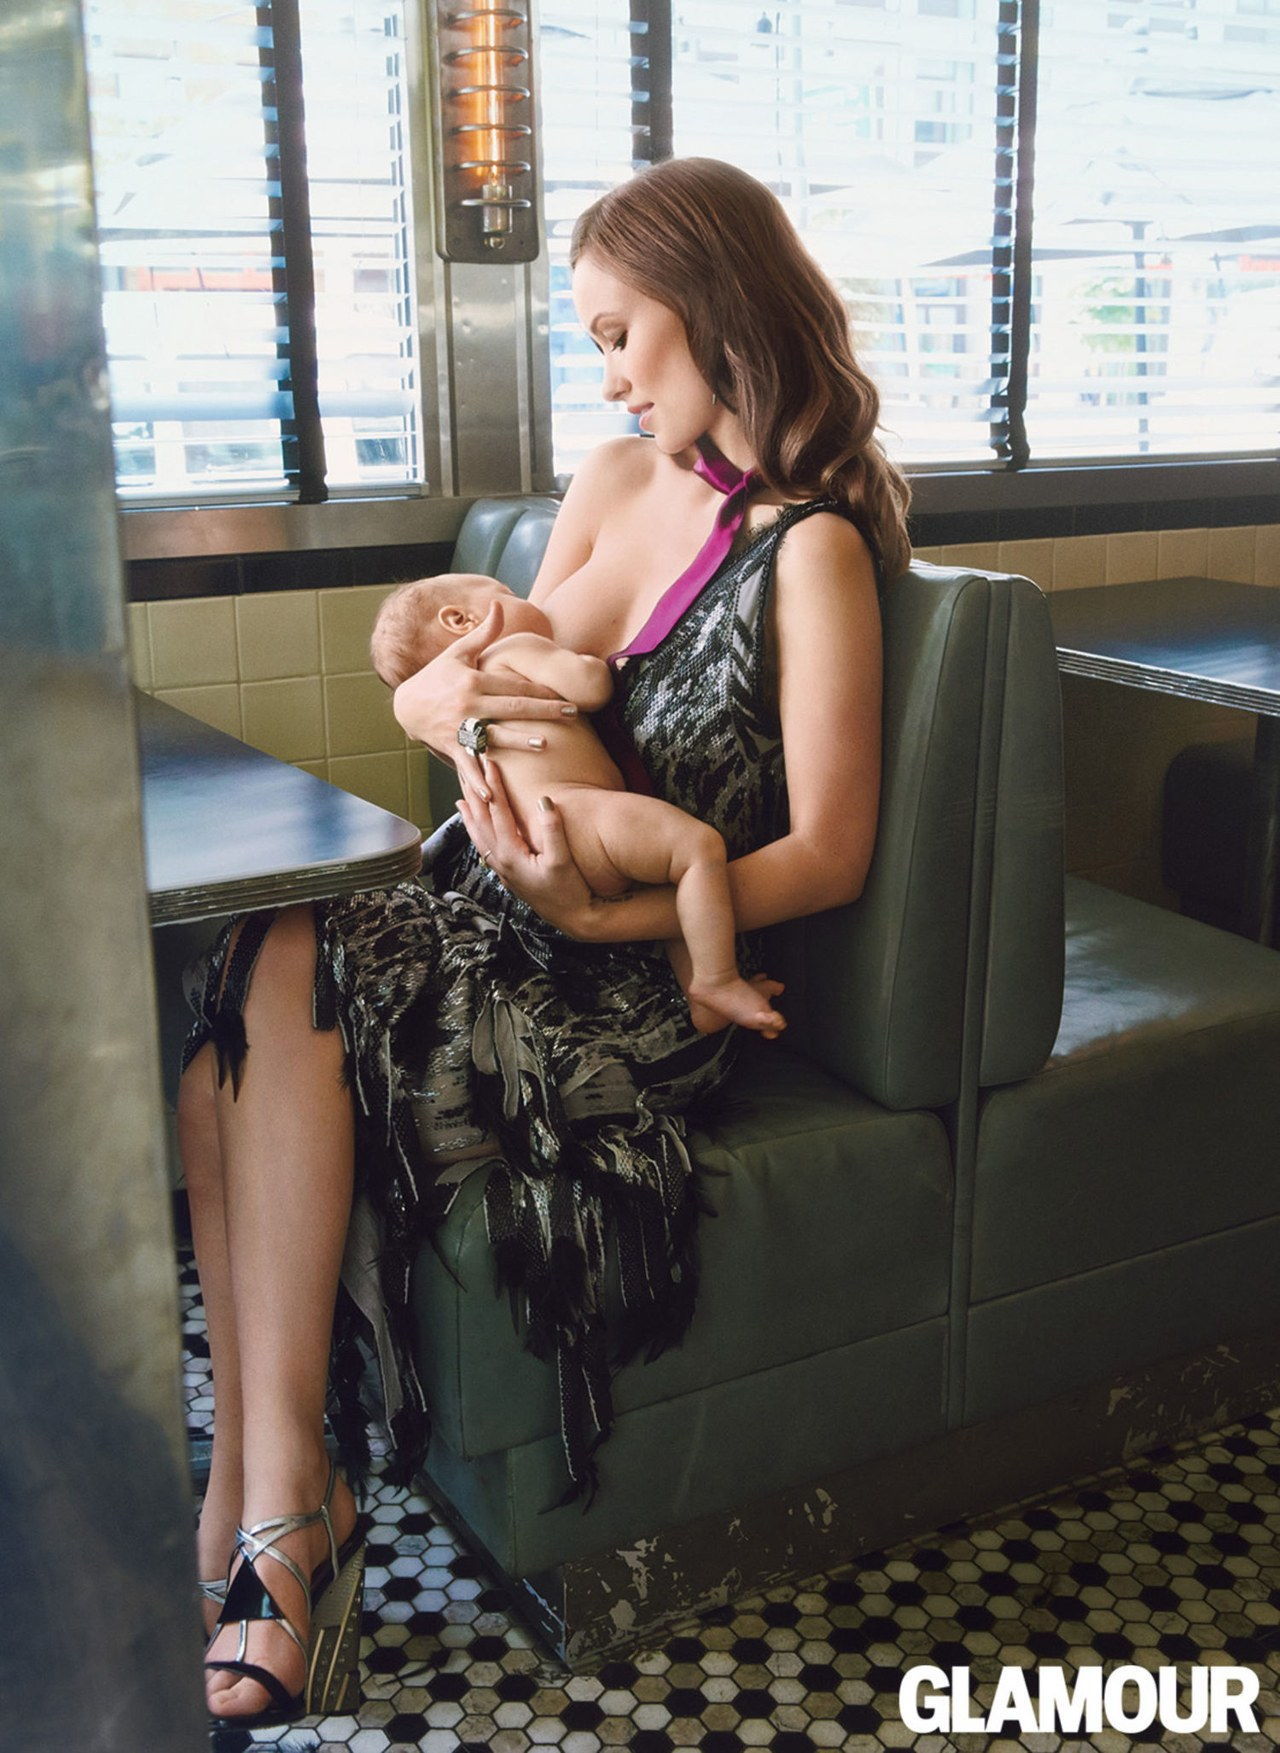 أوليفيا on why it feels natural to be photographed while breast-feeding Otis...